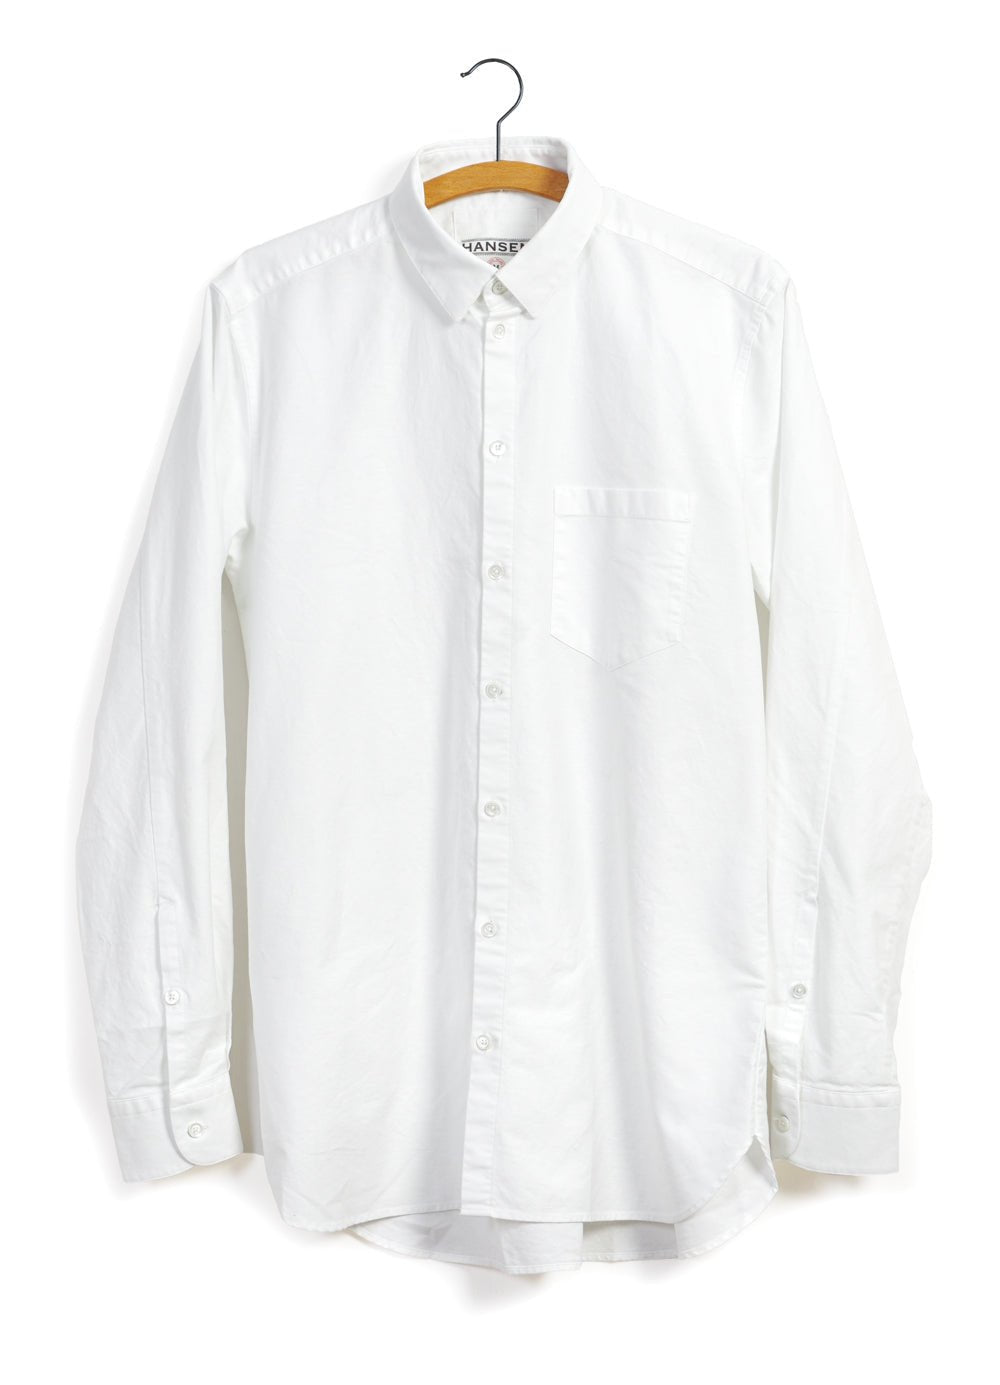 HANSEN Garments - HAAKON | Hidden Button Down Shirt | White - HANSEN Garments